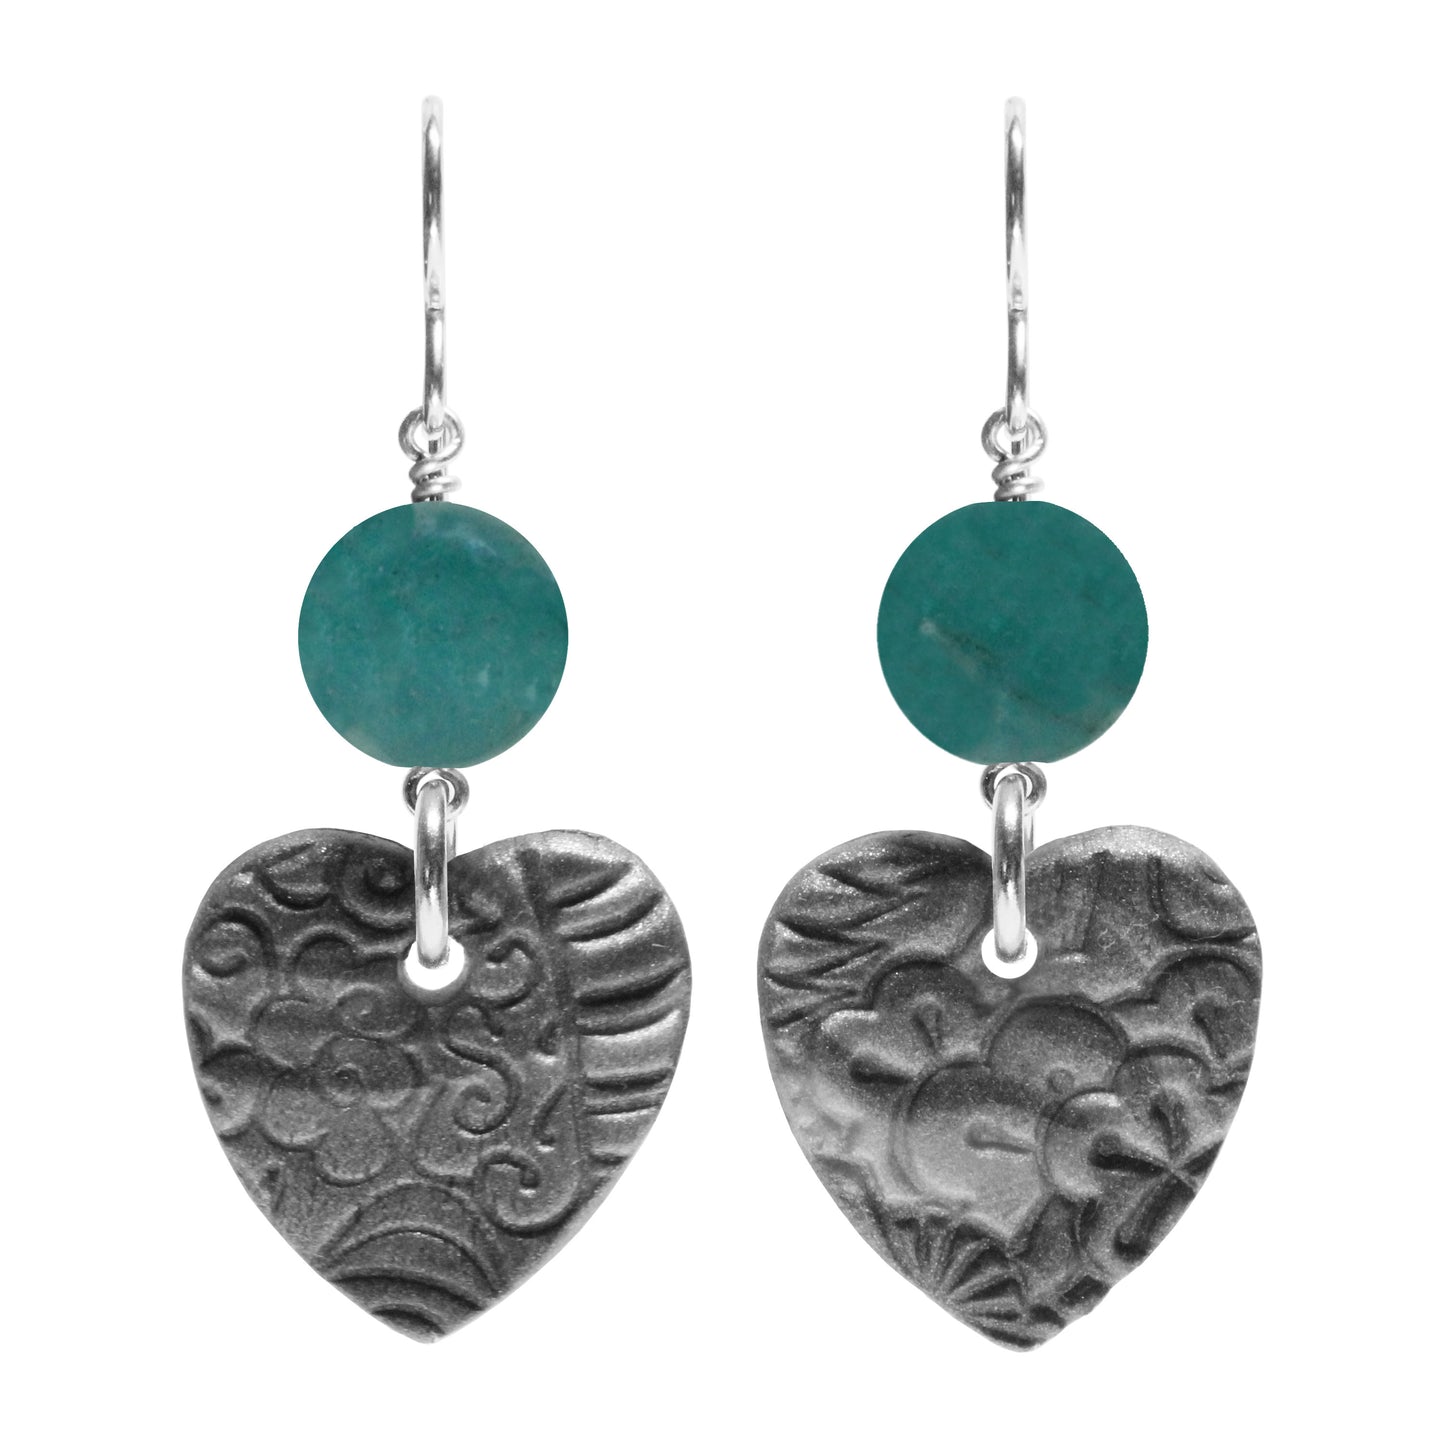 Grey Heart Charm Earrings / 48mm length / sterling silver hook earwires / choose your own gemstone